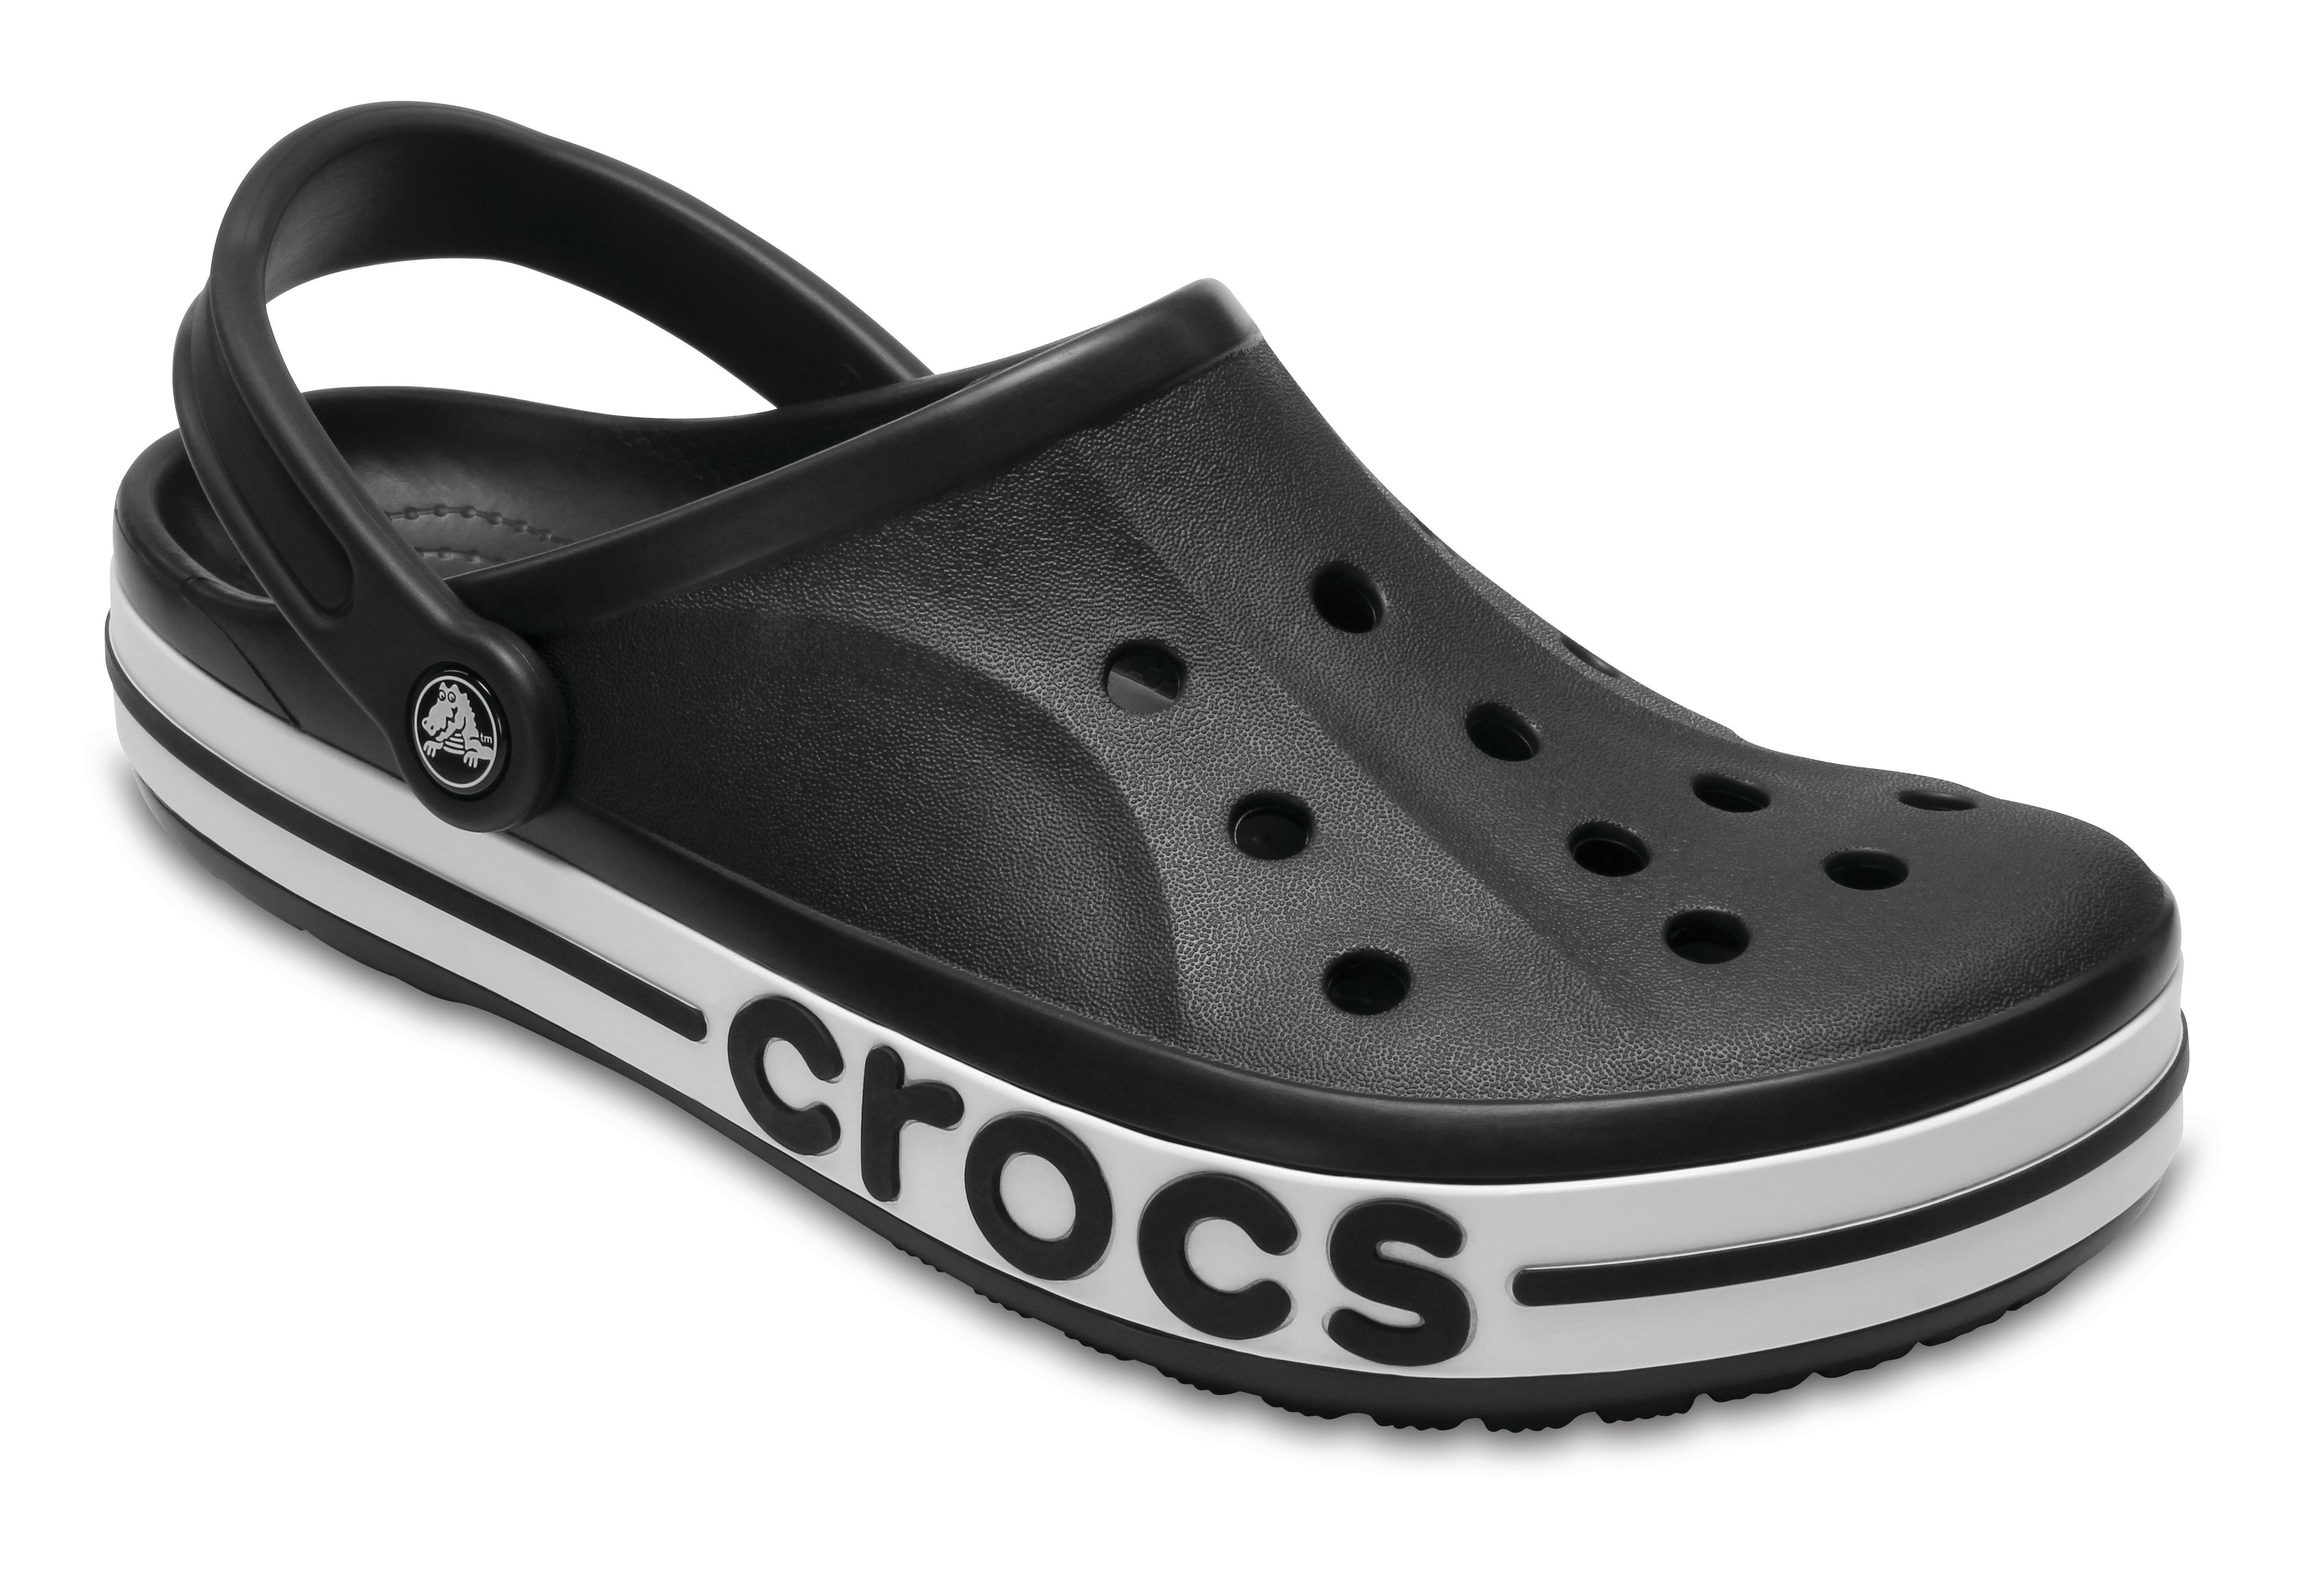 Black and White Crocs